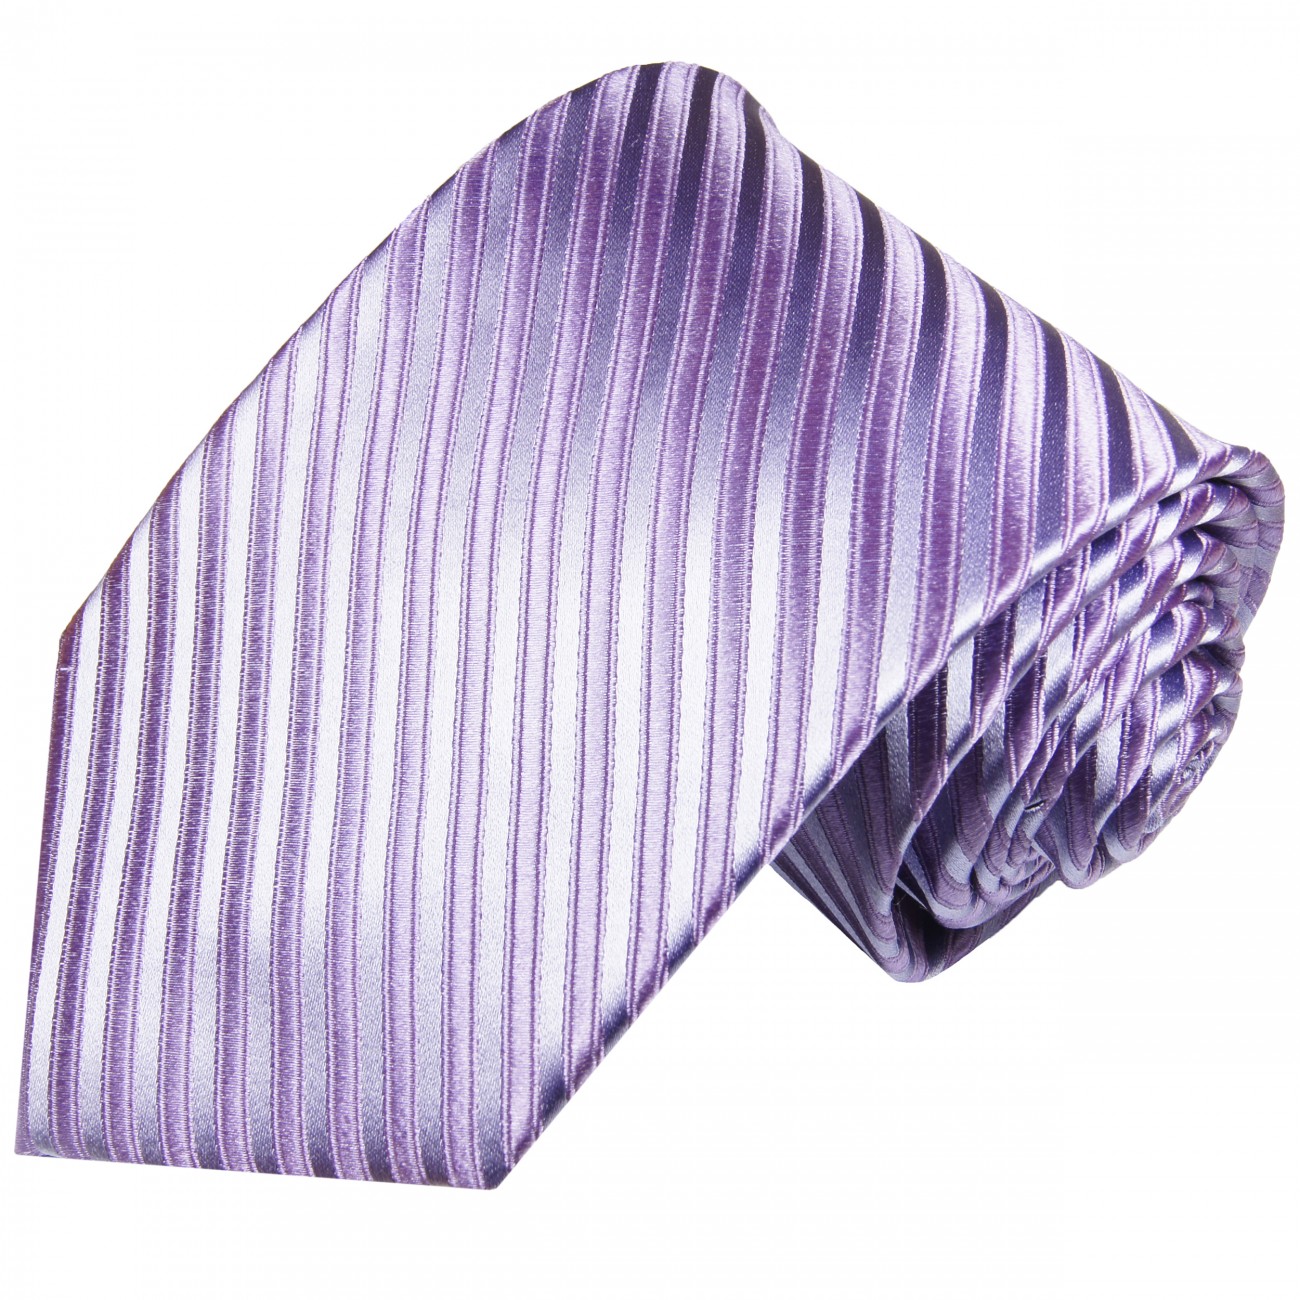 Details about   Purple Striped Silk Necktie by Paul Malone 